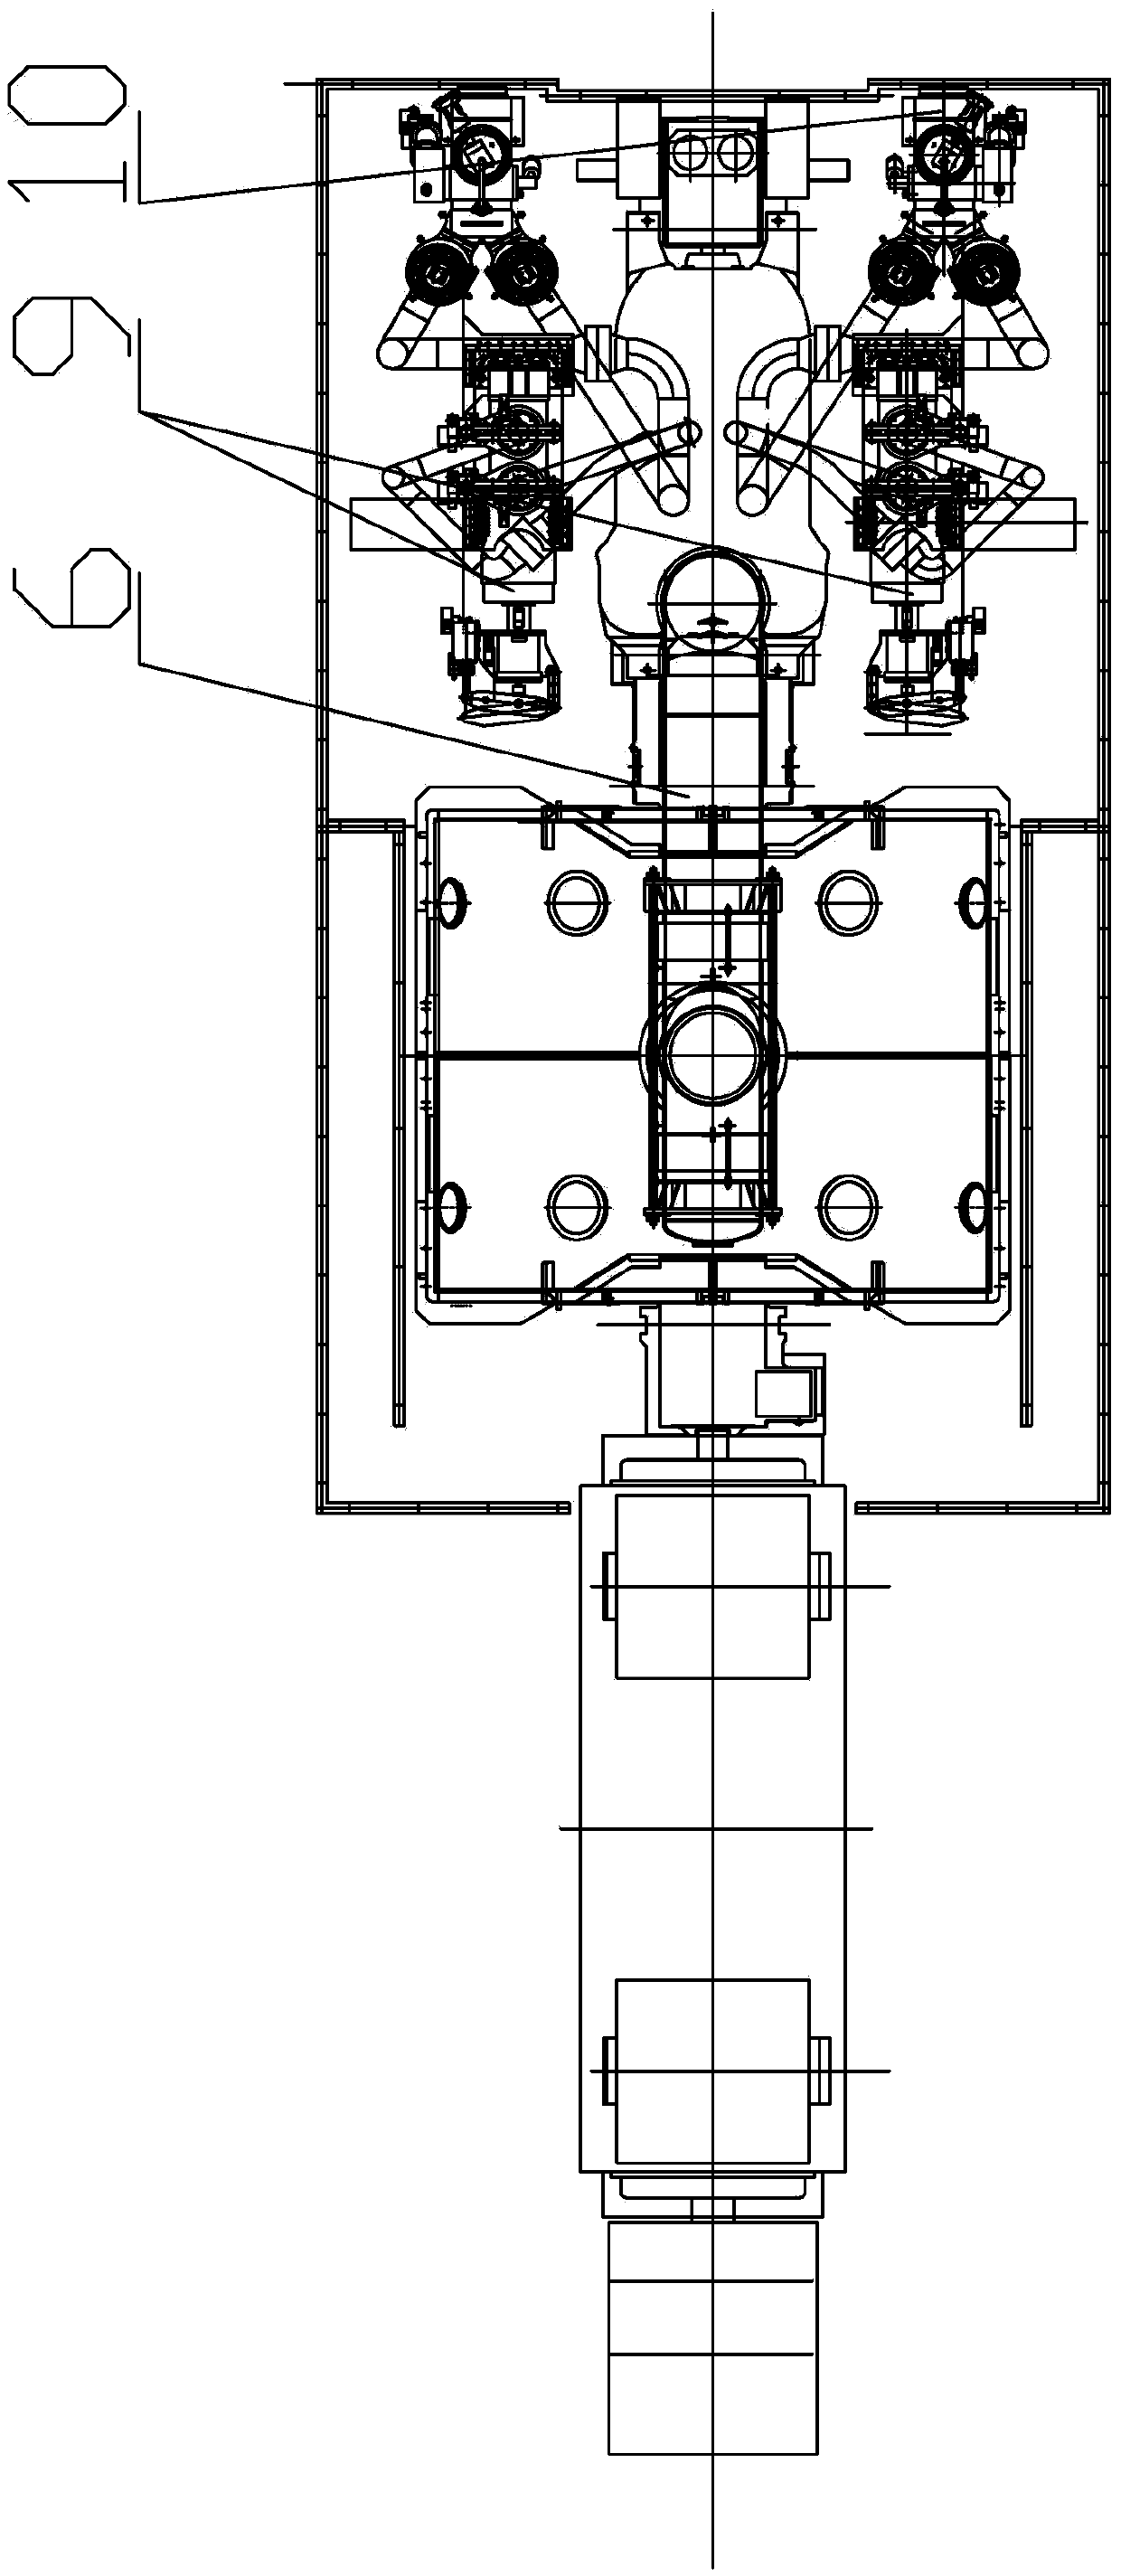 660MW-grade primary intermediate reheat extraction steam turbine unit